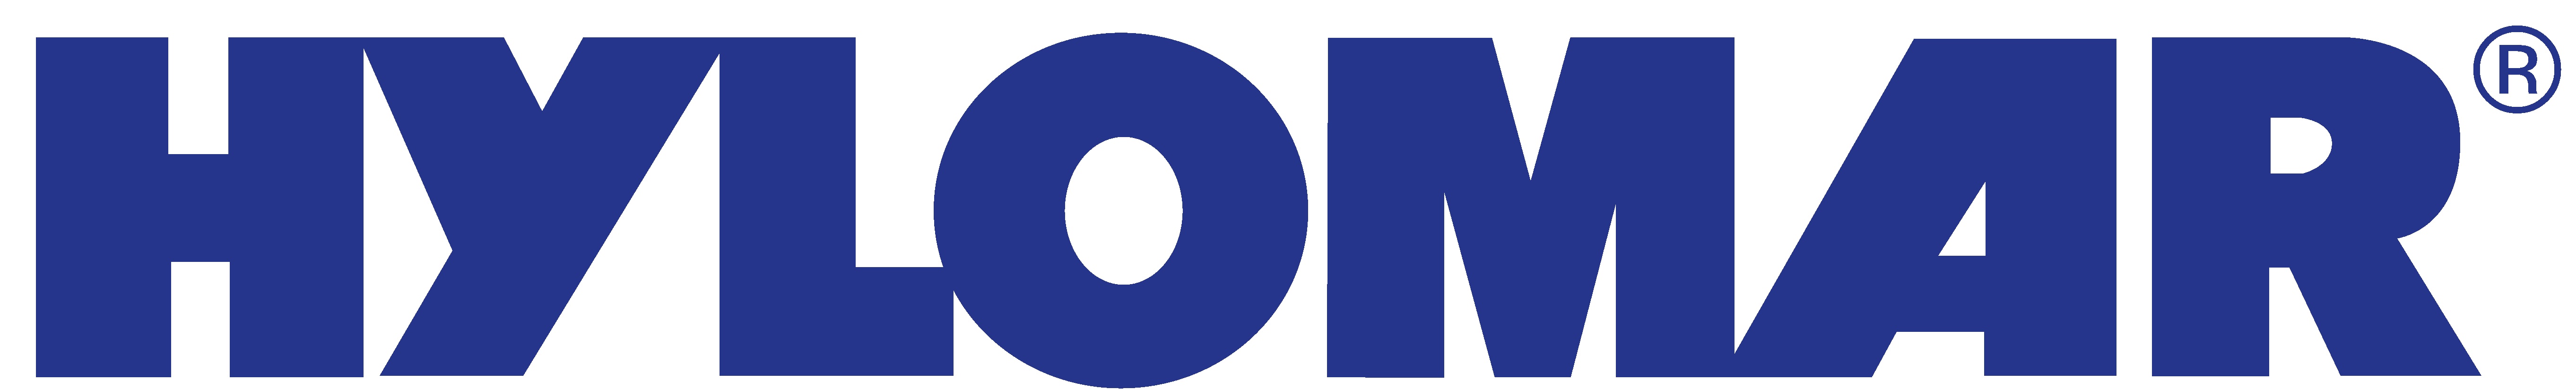 hylomar logo